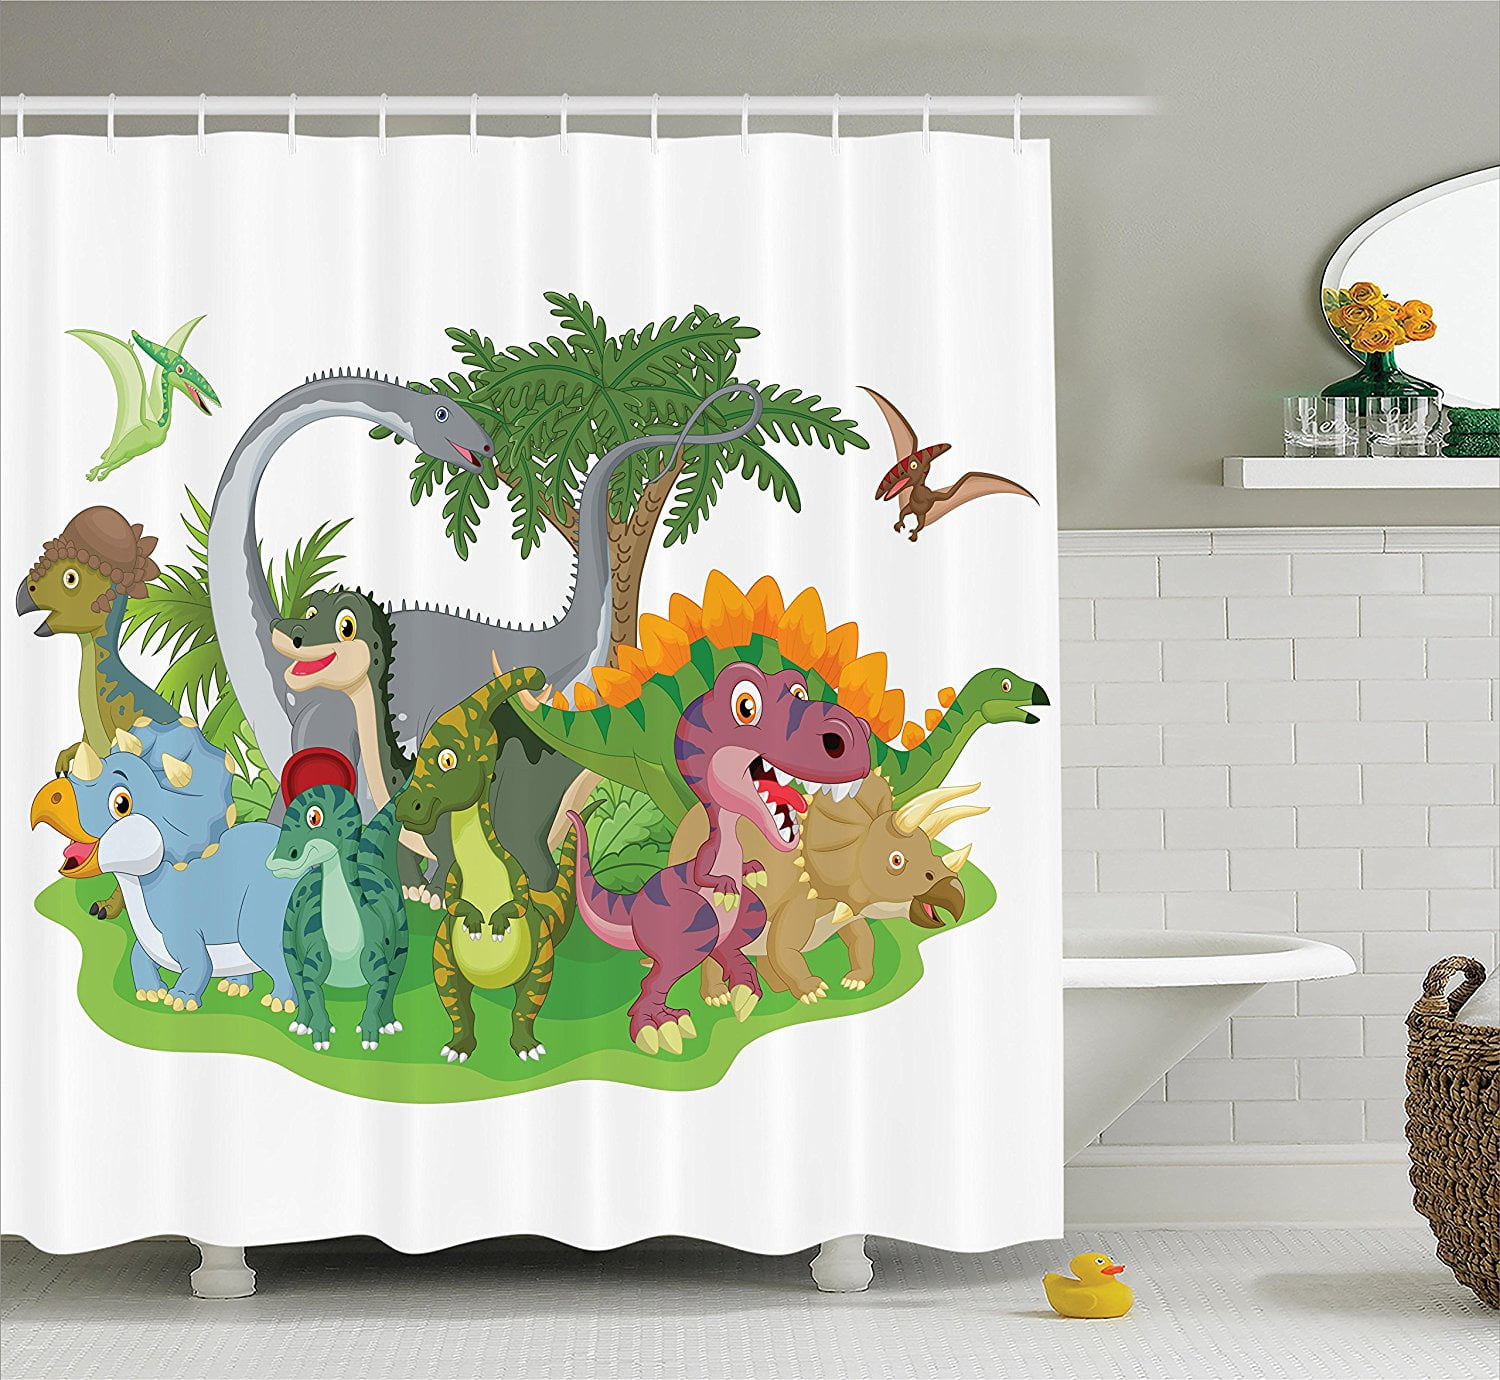 Danger Jurassic Dinosaur Waterproof Fabric Shower Curtain Liner Bath Accessory 